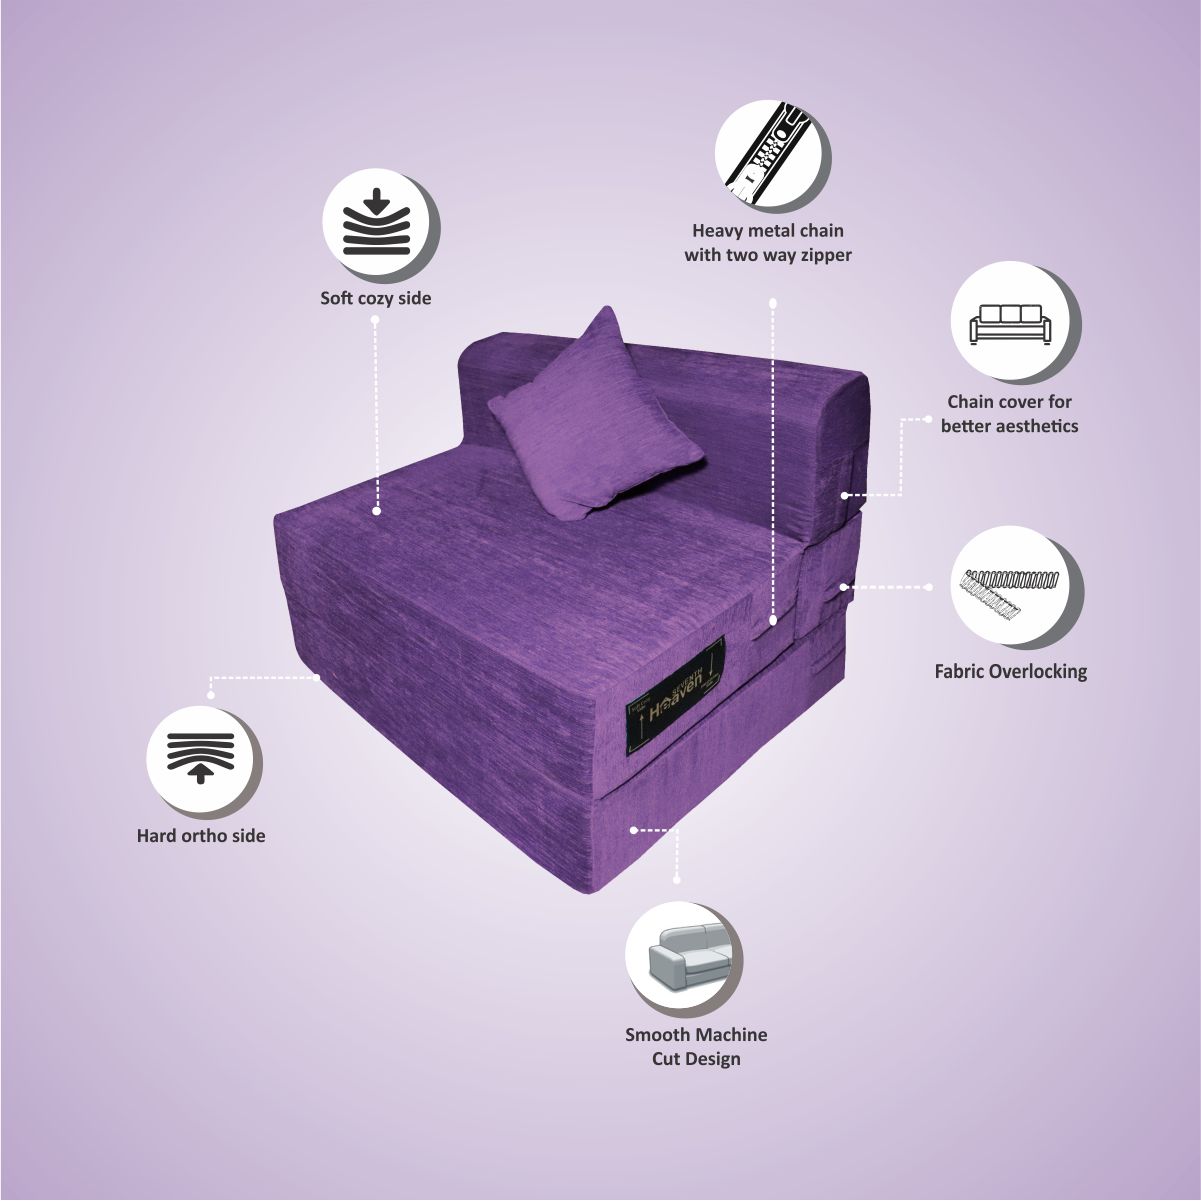 Purple Molfino Fabric 6'×3' Sofa cum Bed with 1 Cushion